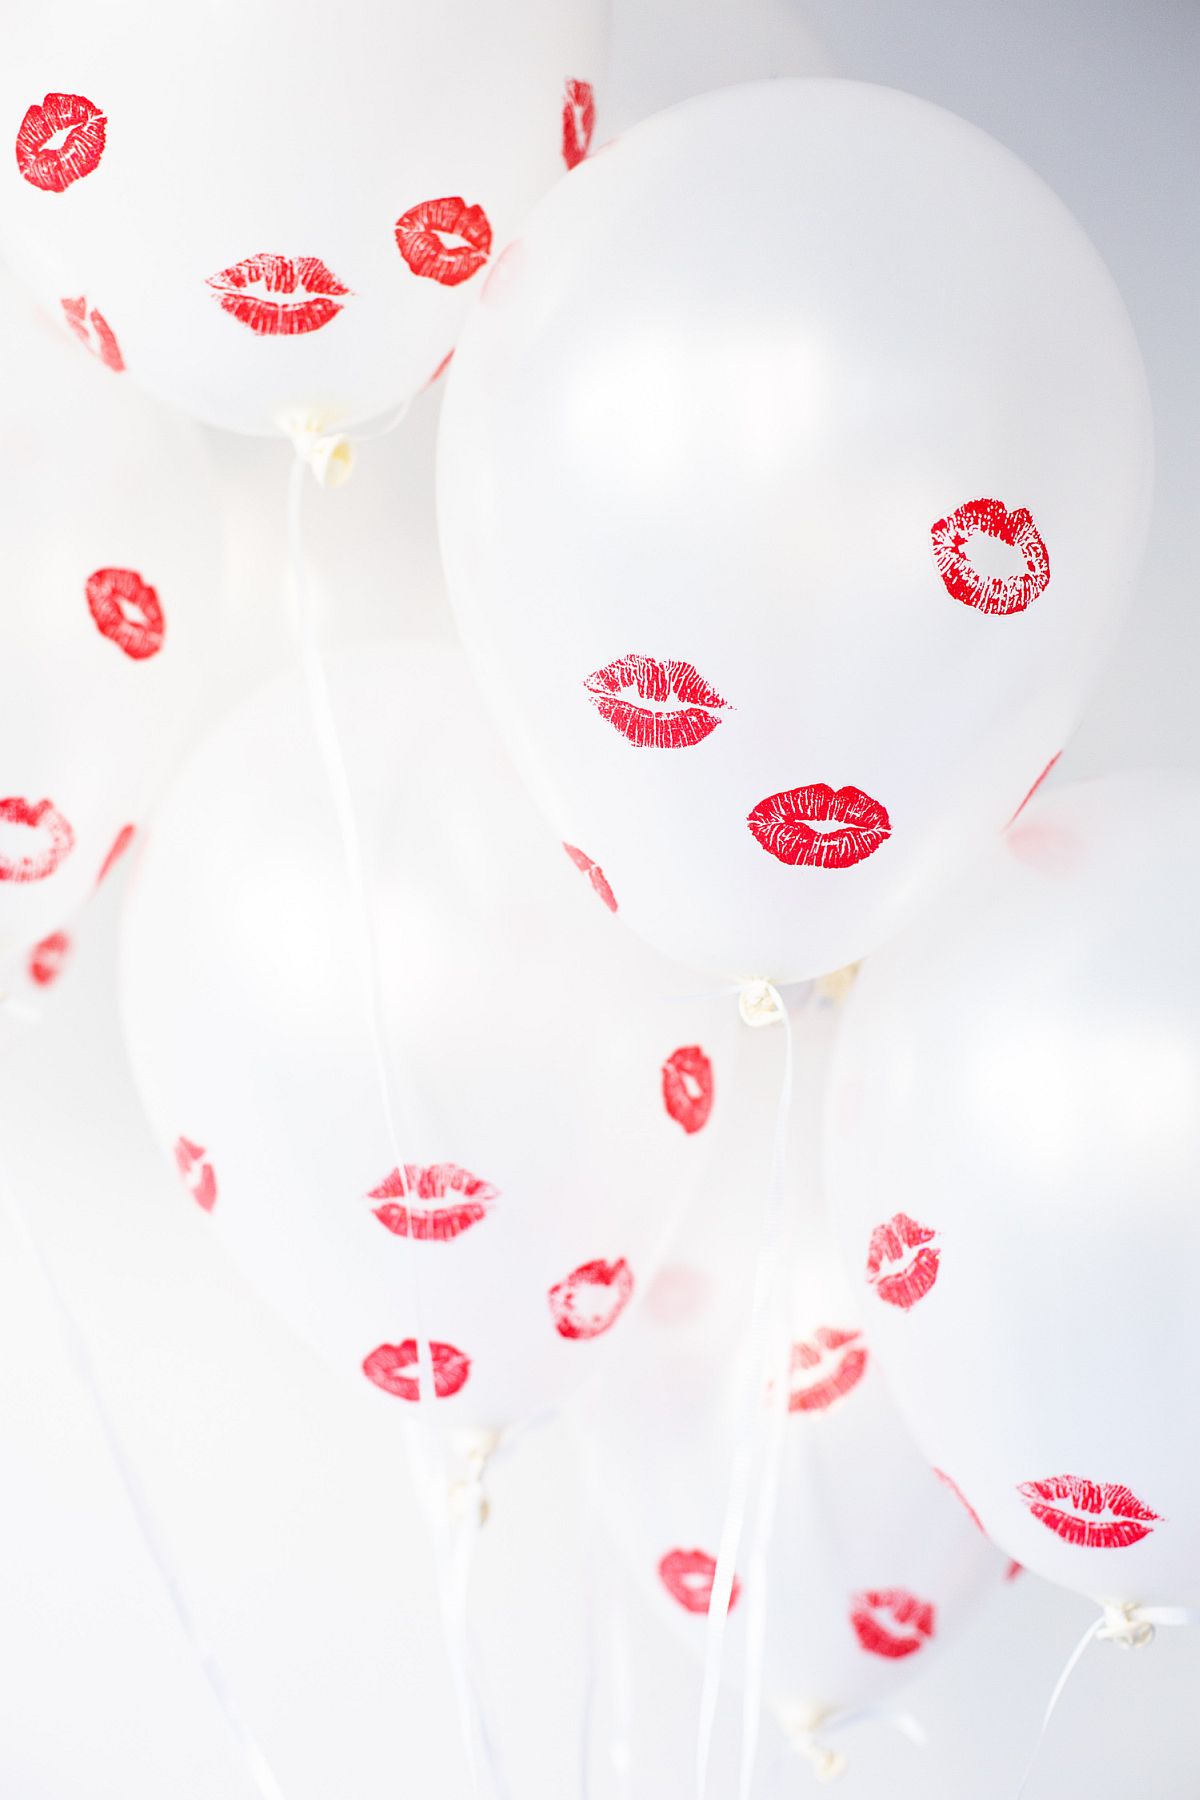 Super-easy-DIY-Kissed-Balloons